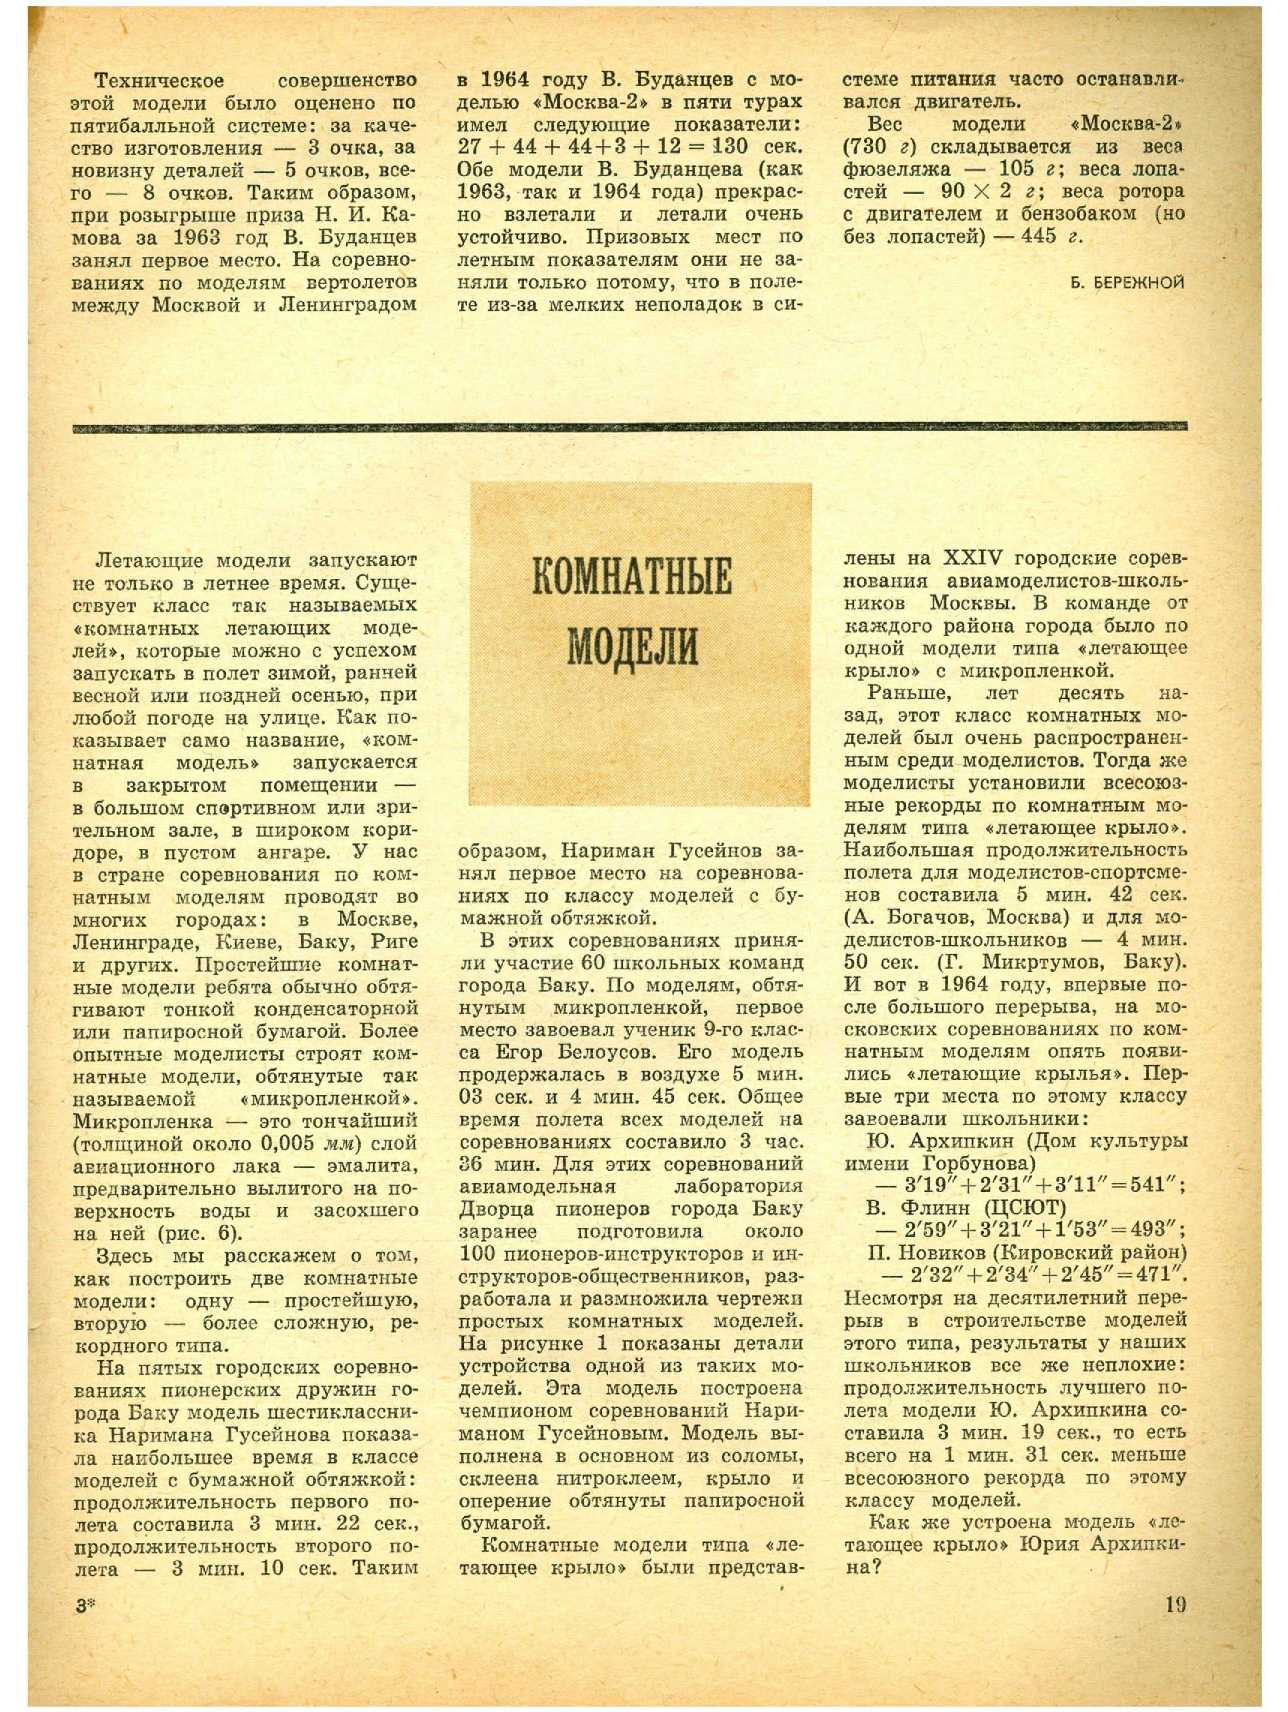 ЮМК 13, 1965, 19 c.